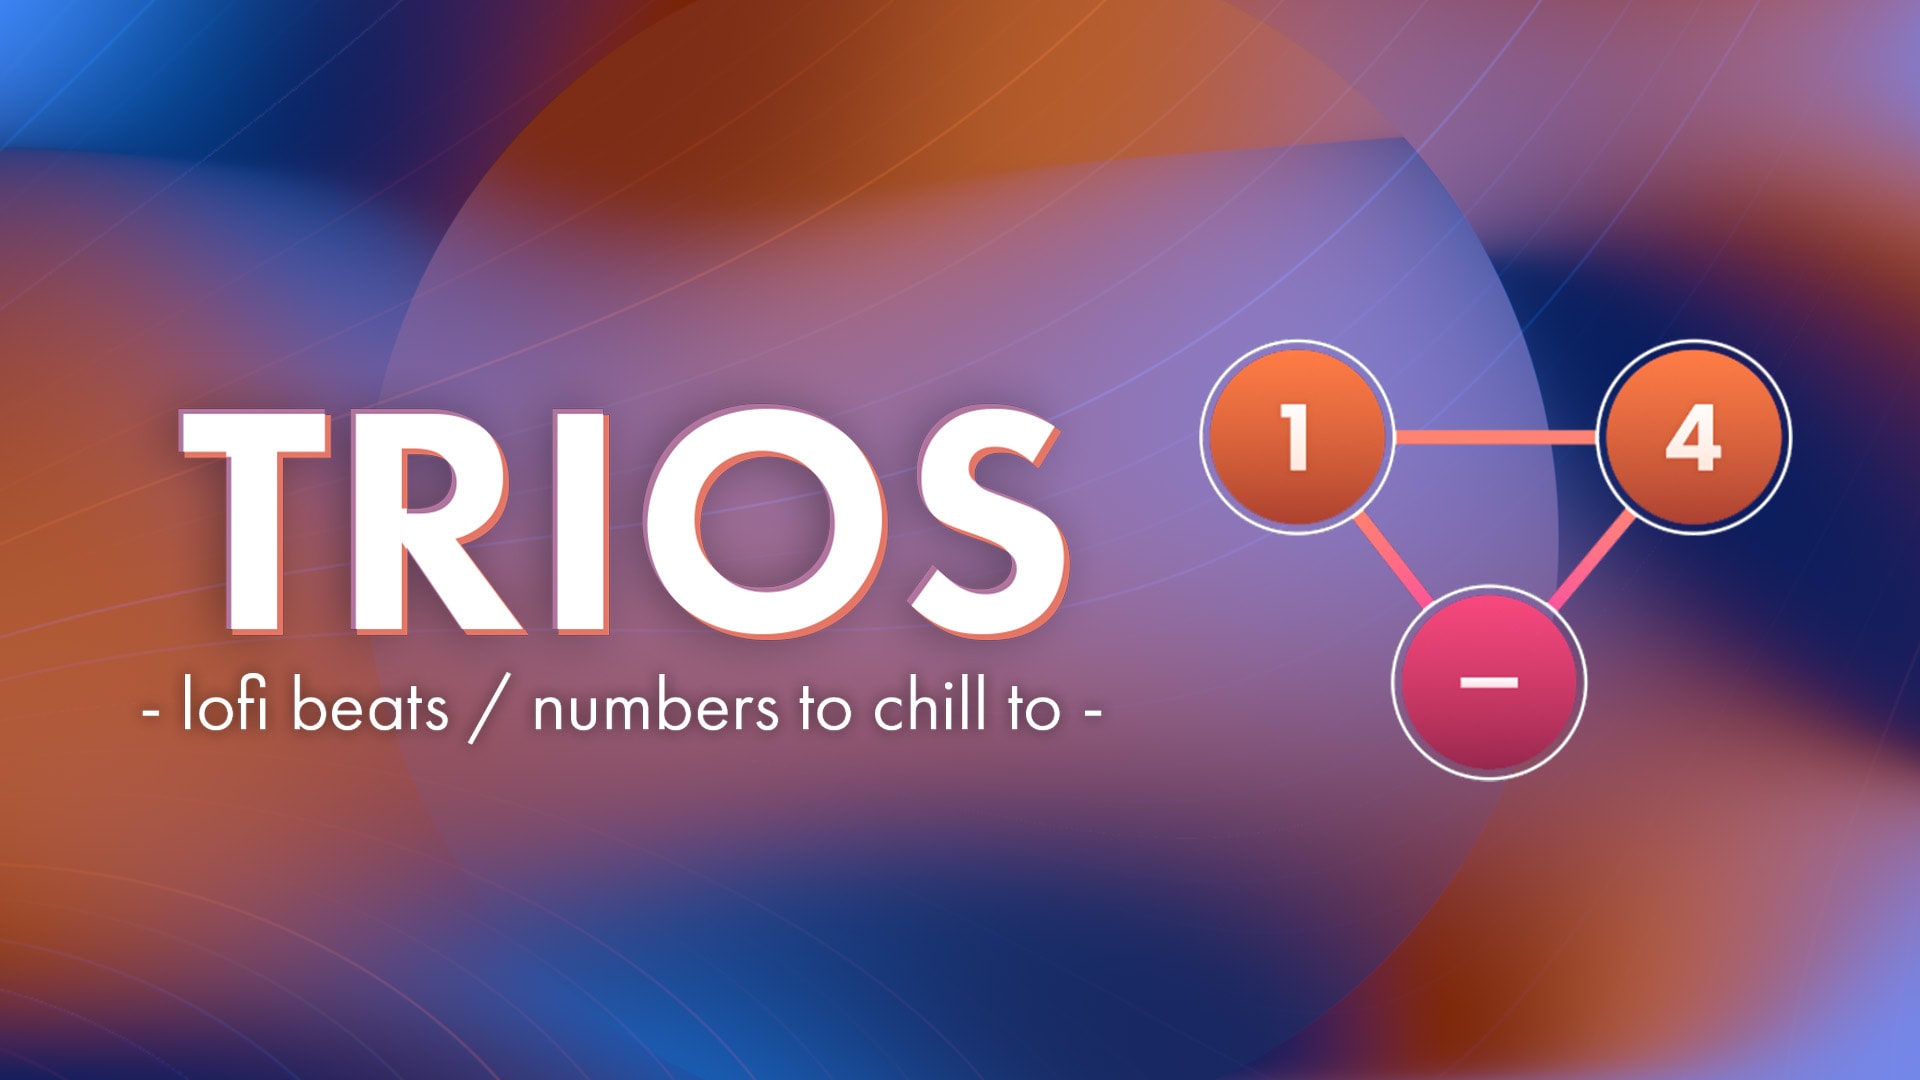 TRIOS - ritmos lofi / números para relajarse